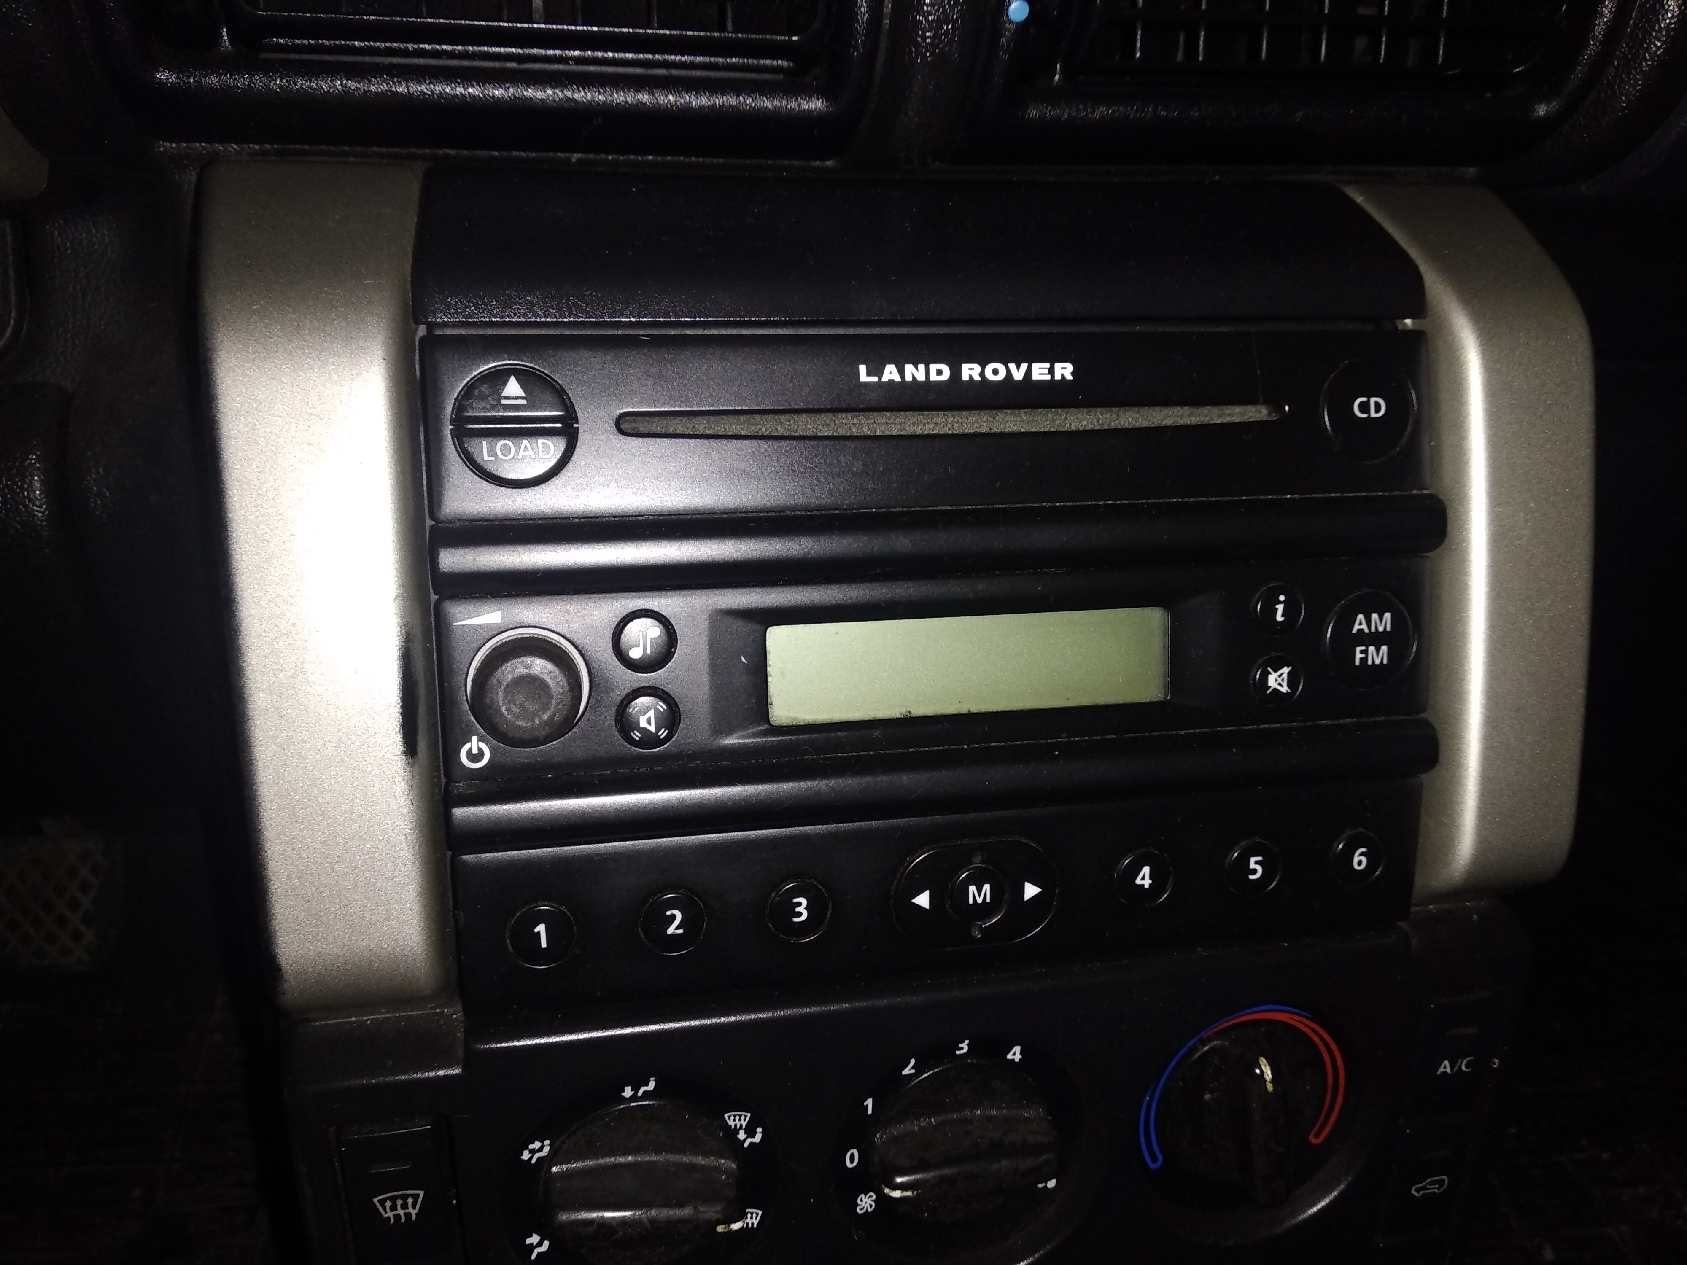 Land Rover LOCKED radia, mam PIN! elektroda.pl